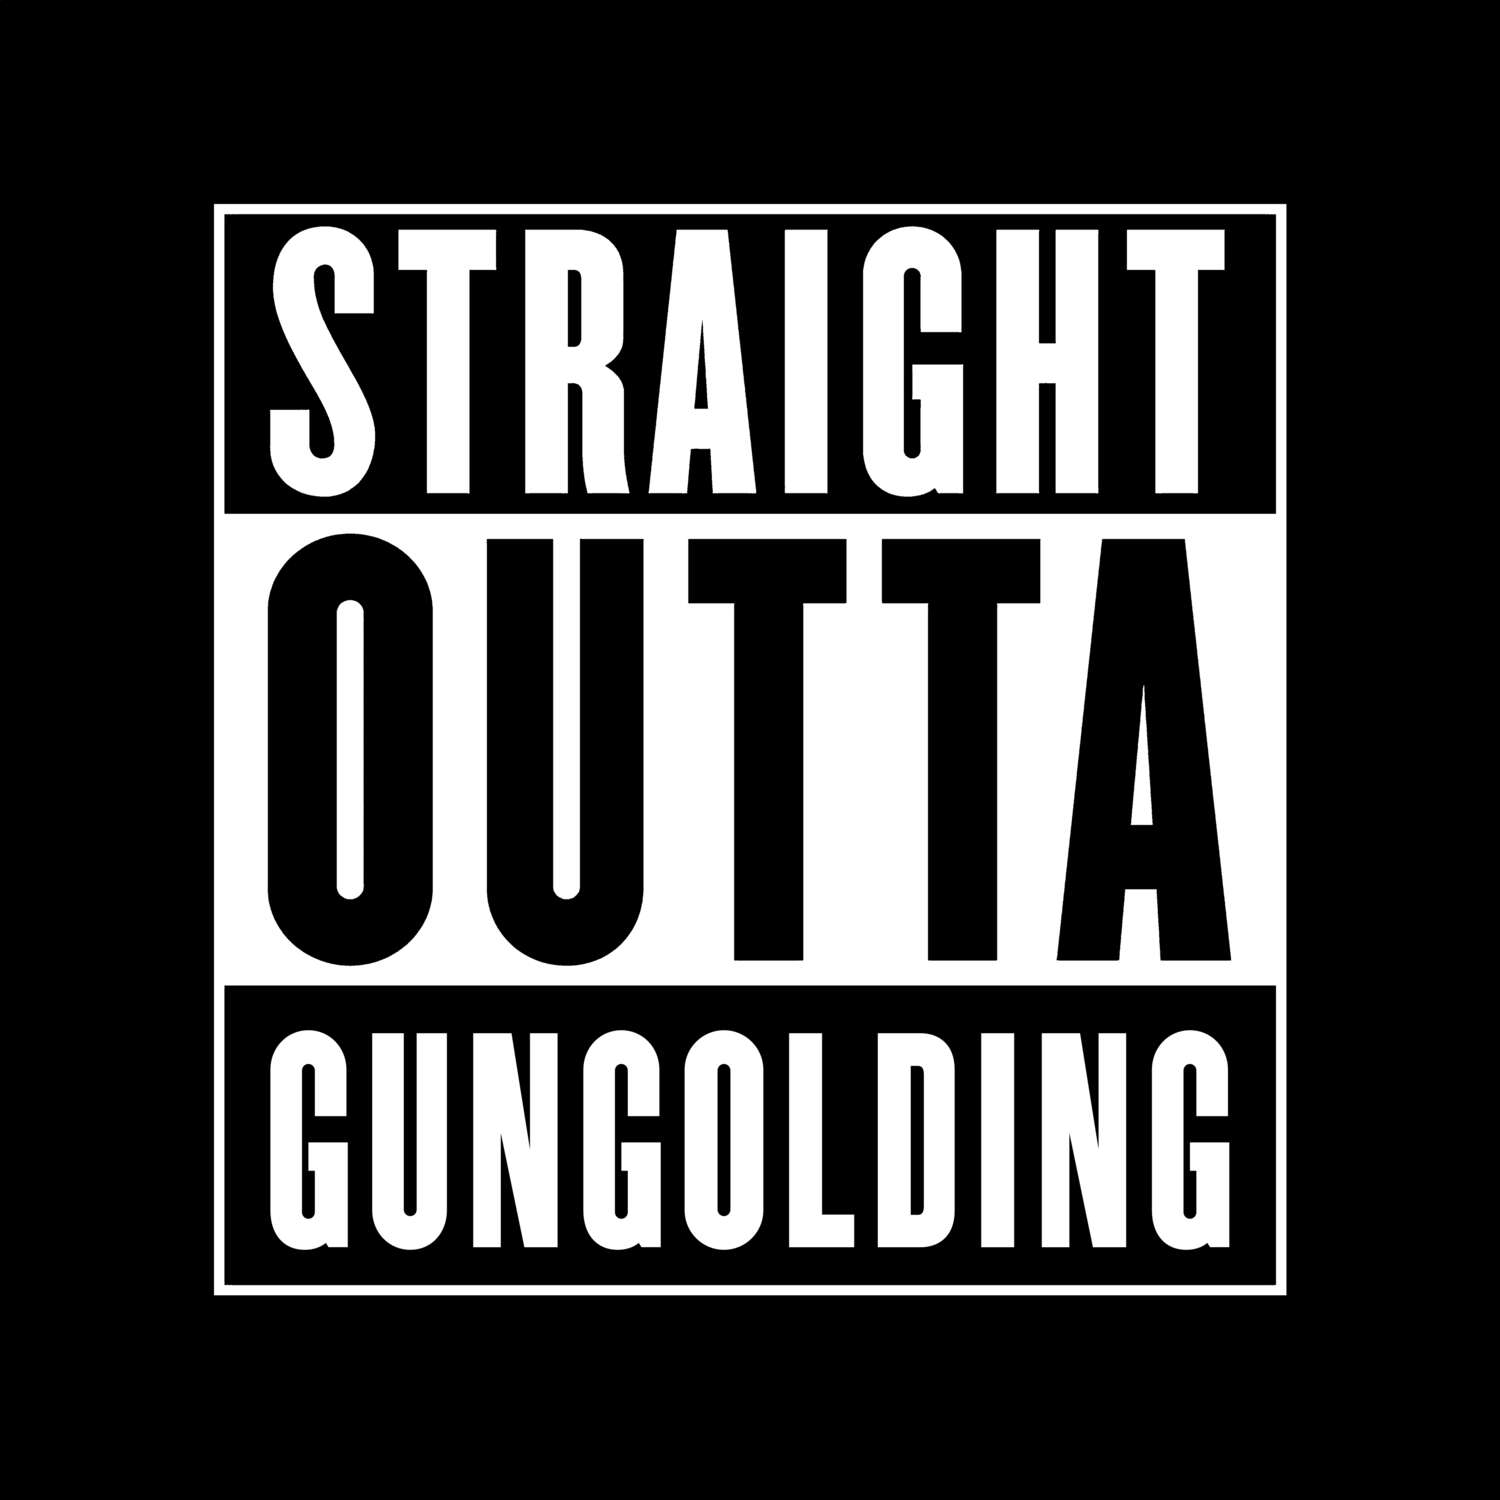 Gungolding T-Shirt »Straight Outta«